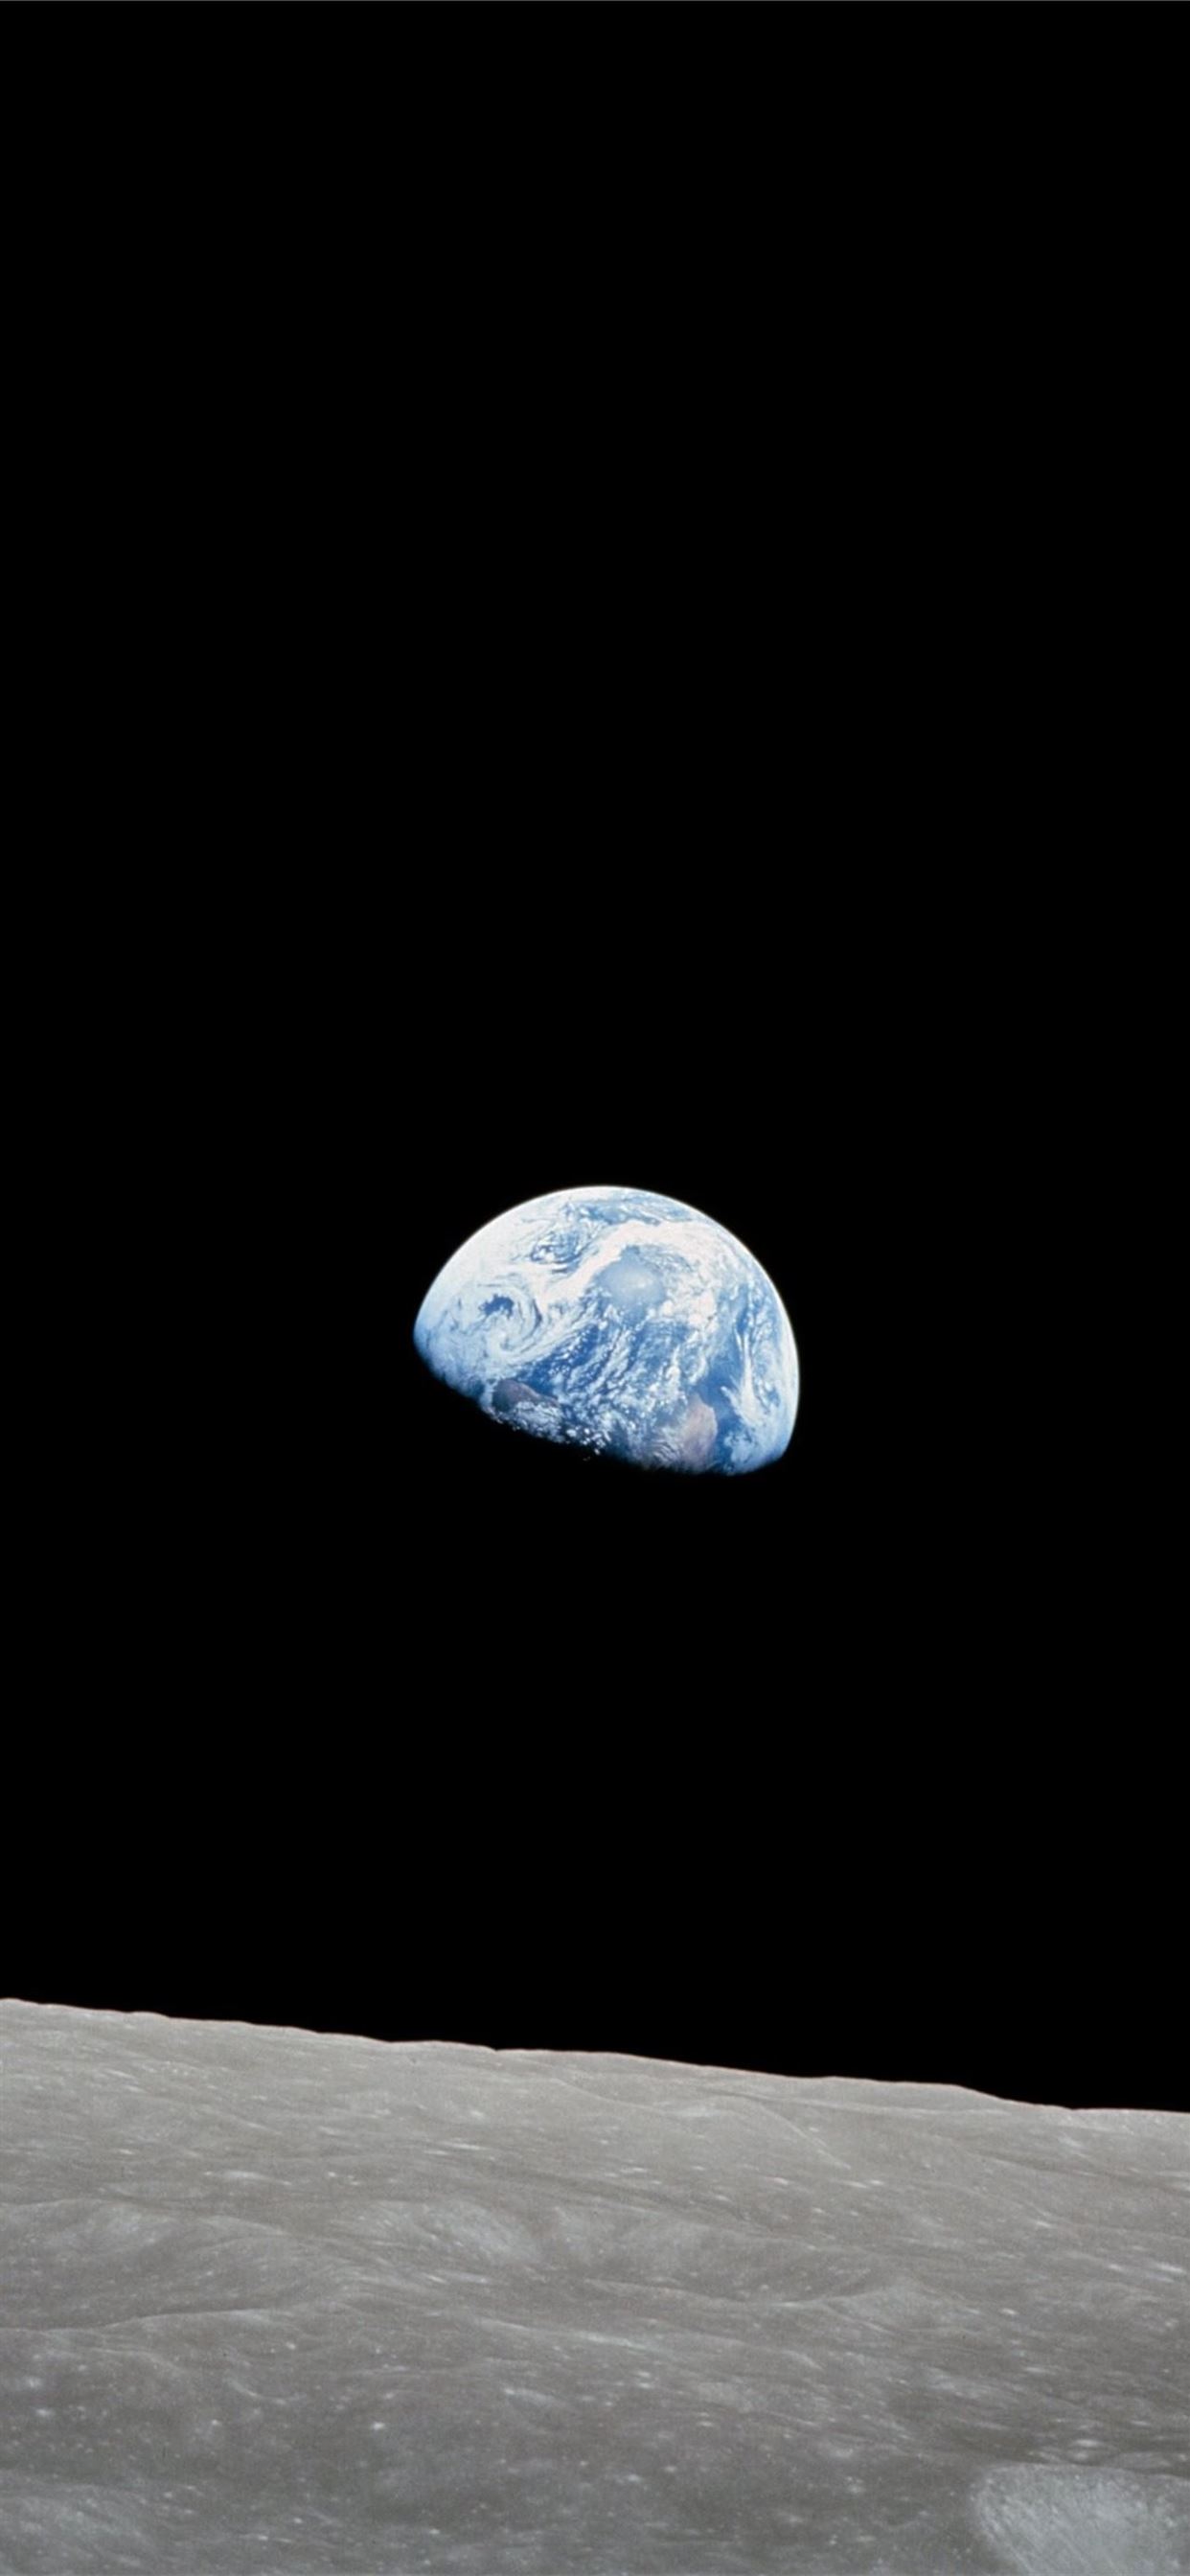 Earthrise Images  Free Download on Freepik